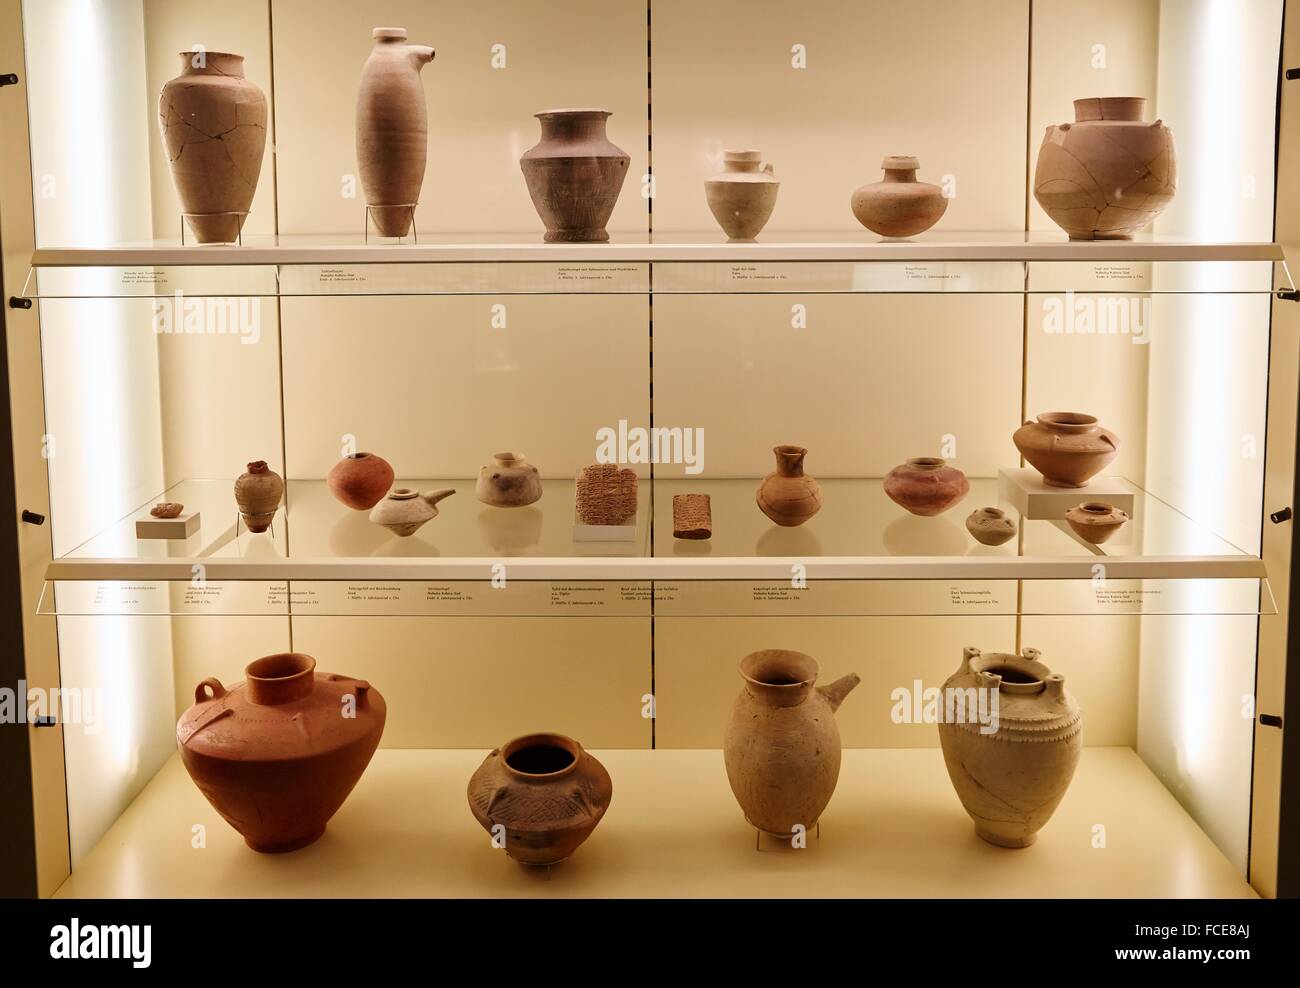 Keramik museum hi-res stock photography and images - Alamy